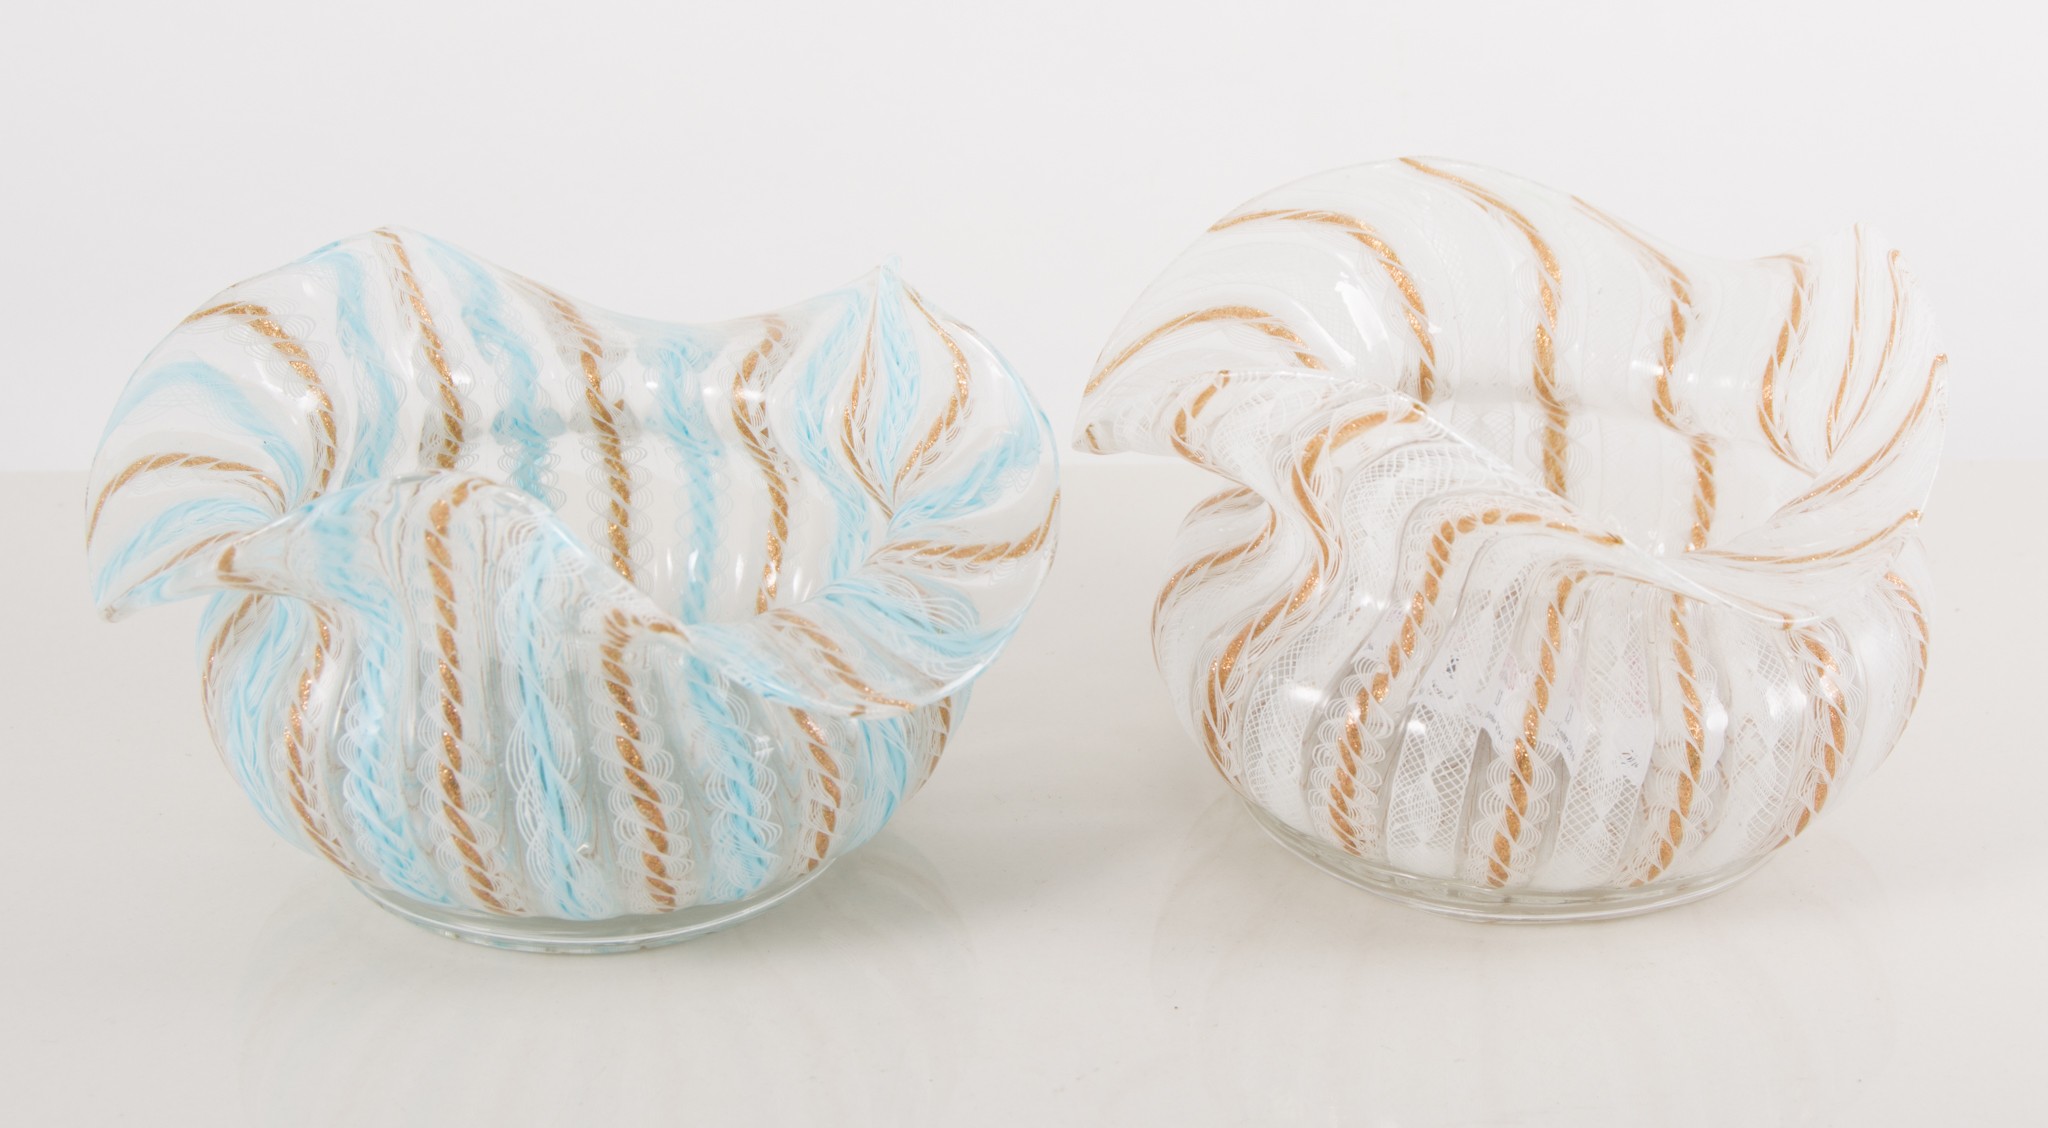 Pair of Venetian glass bowls, wavy rims, latticino with aventurine flecks, height 8cm.